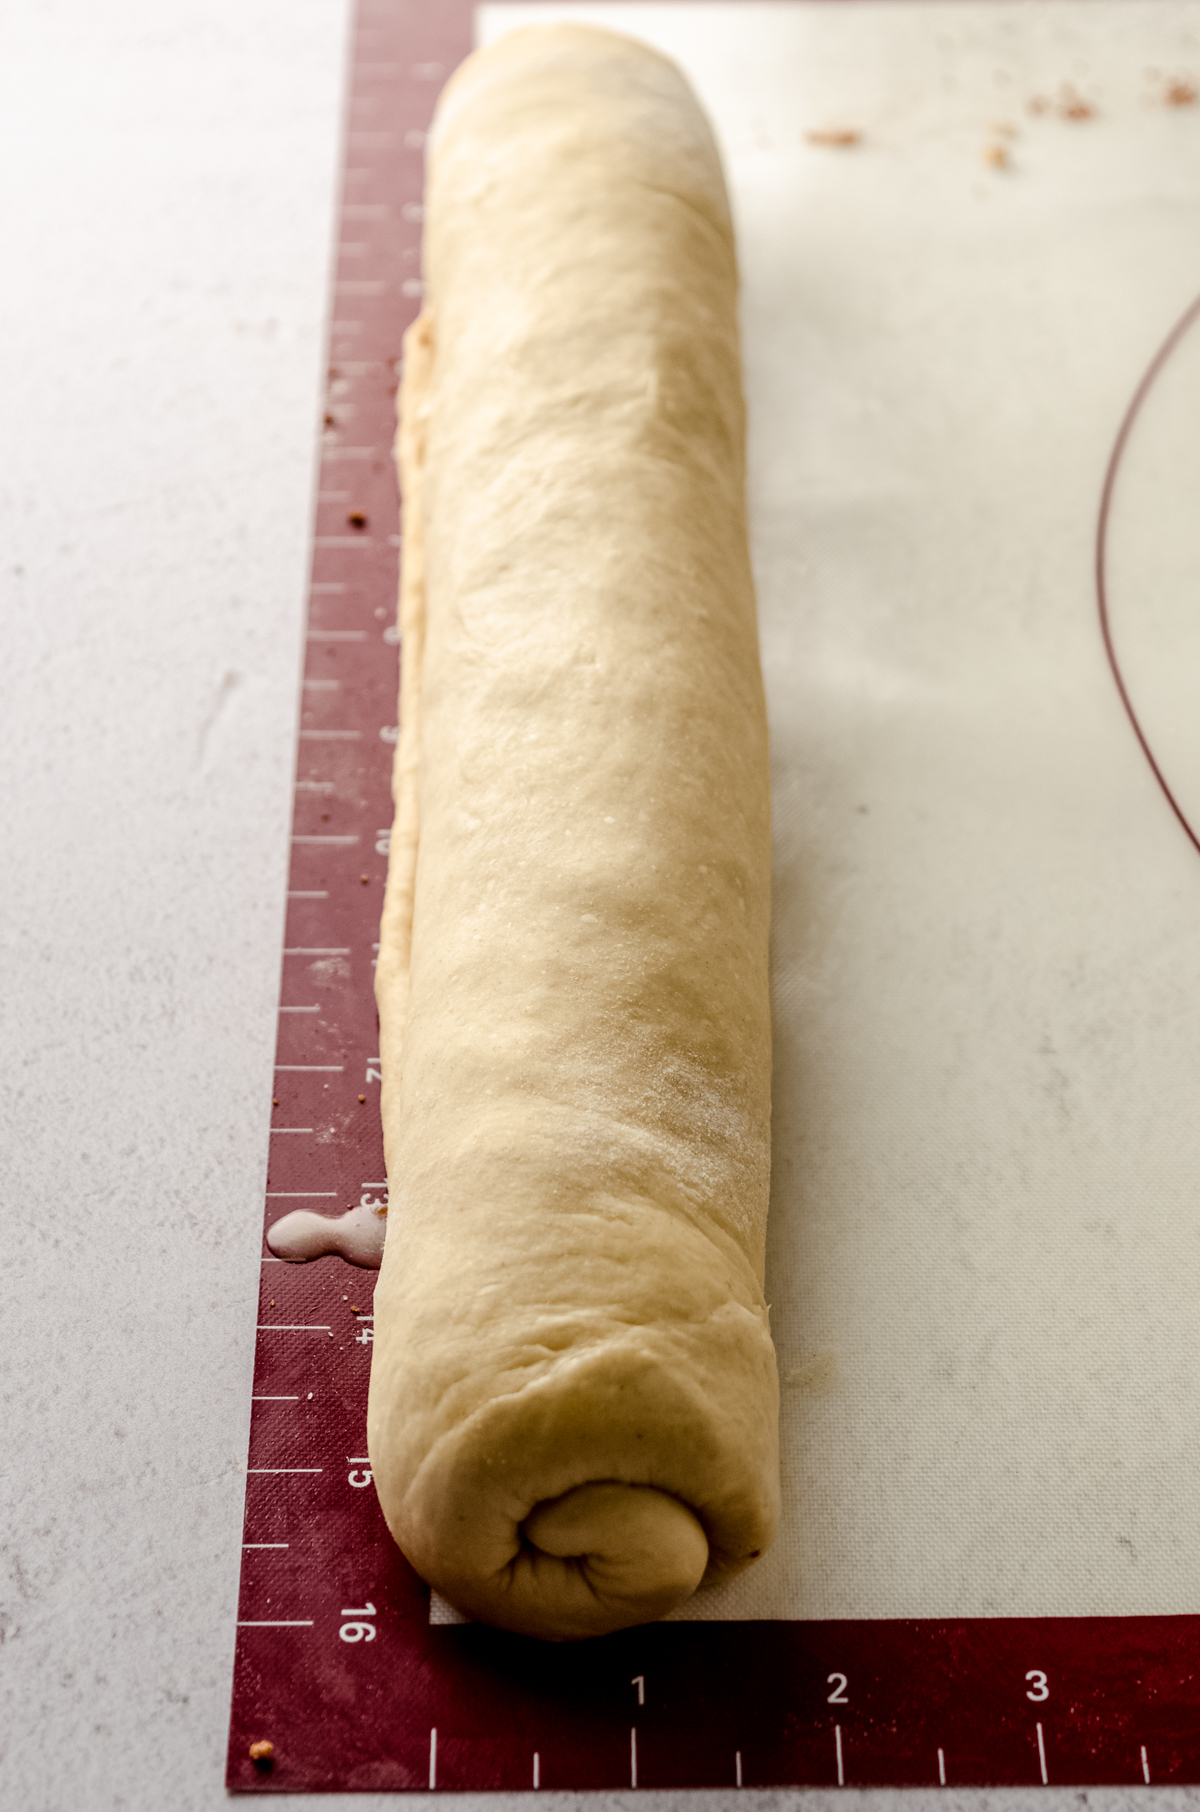 A log of eggnog cinnamon rolls ready to be sliced.